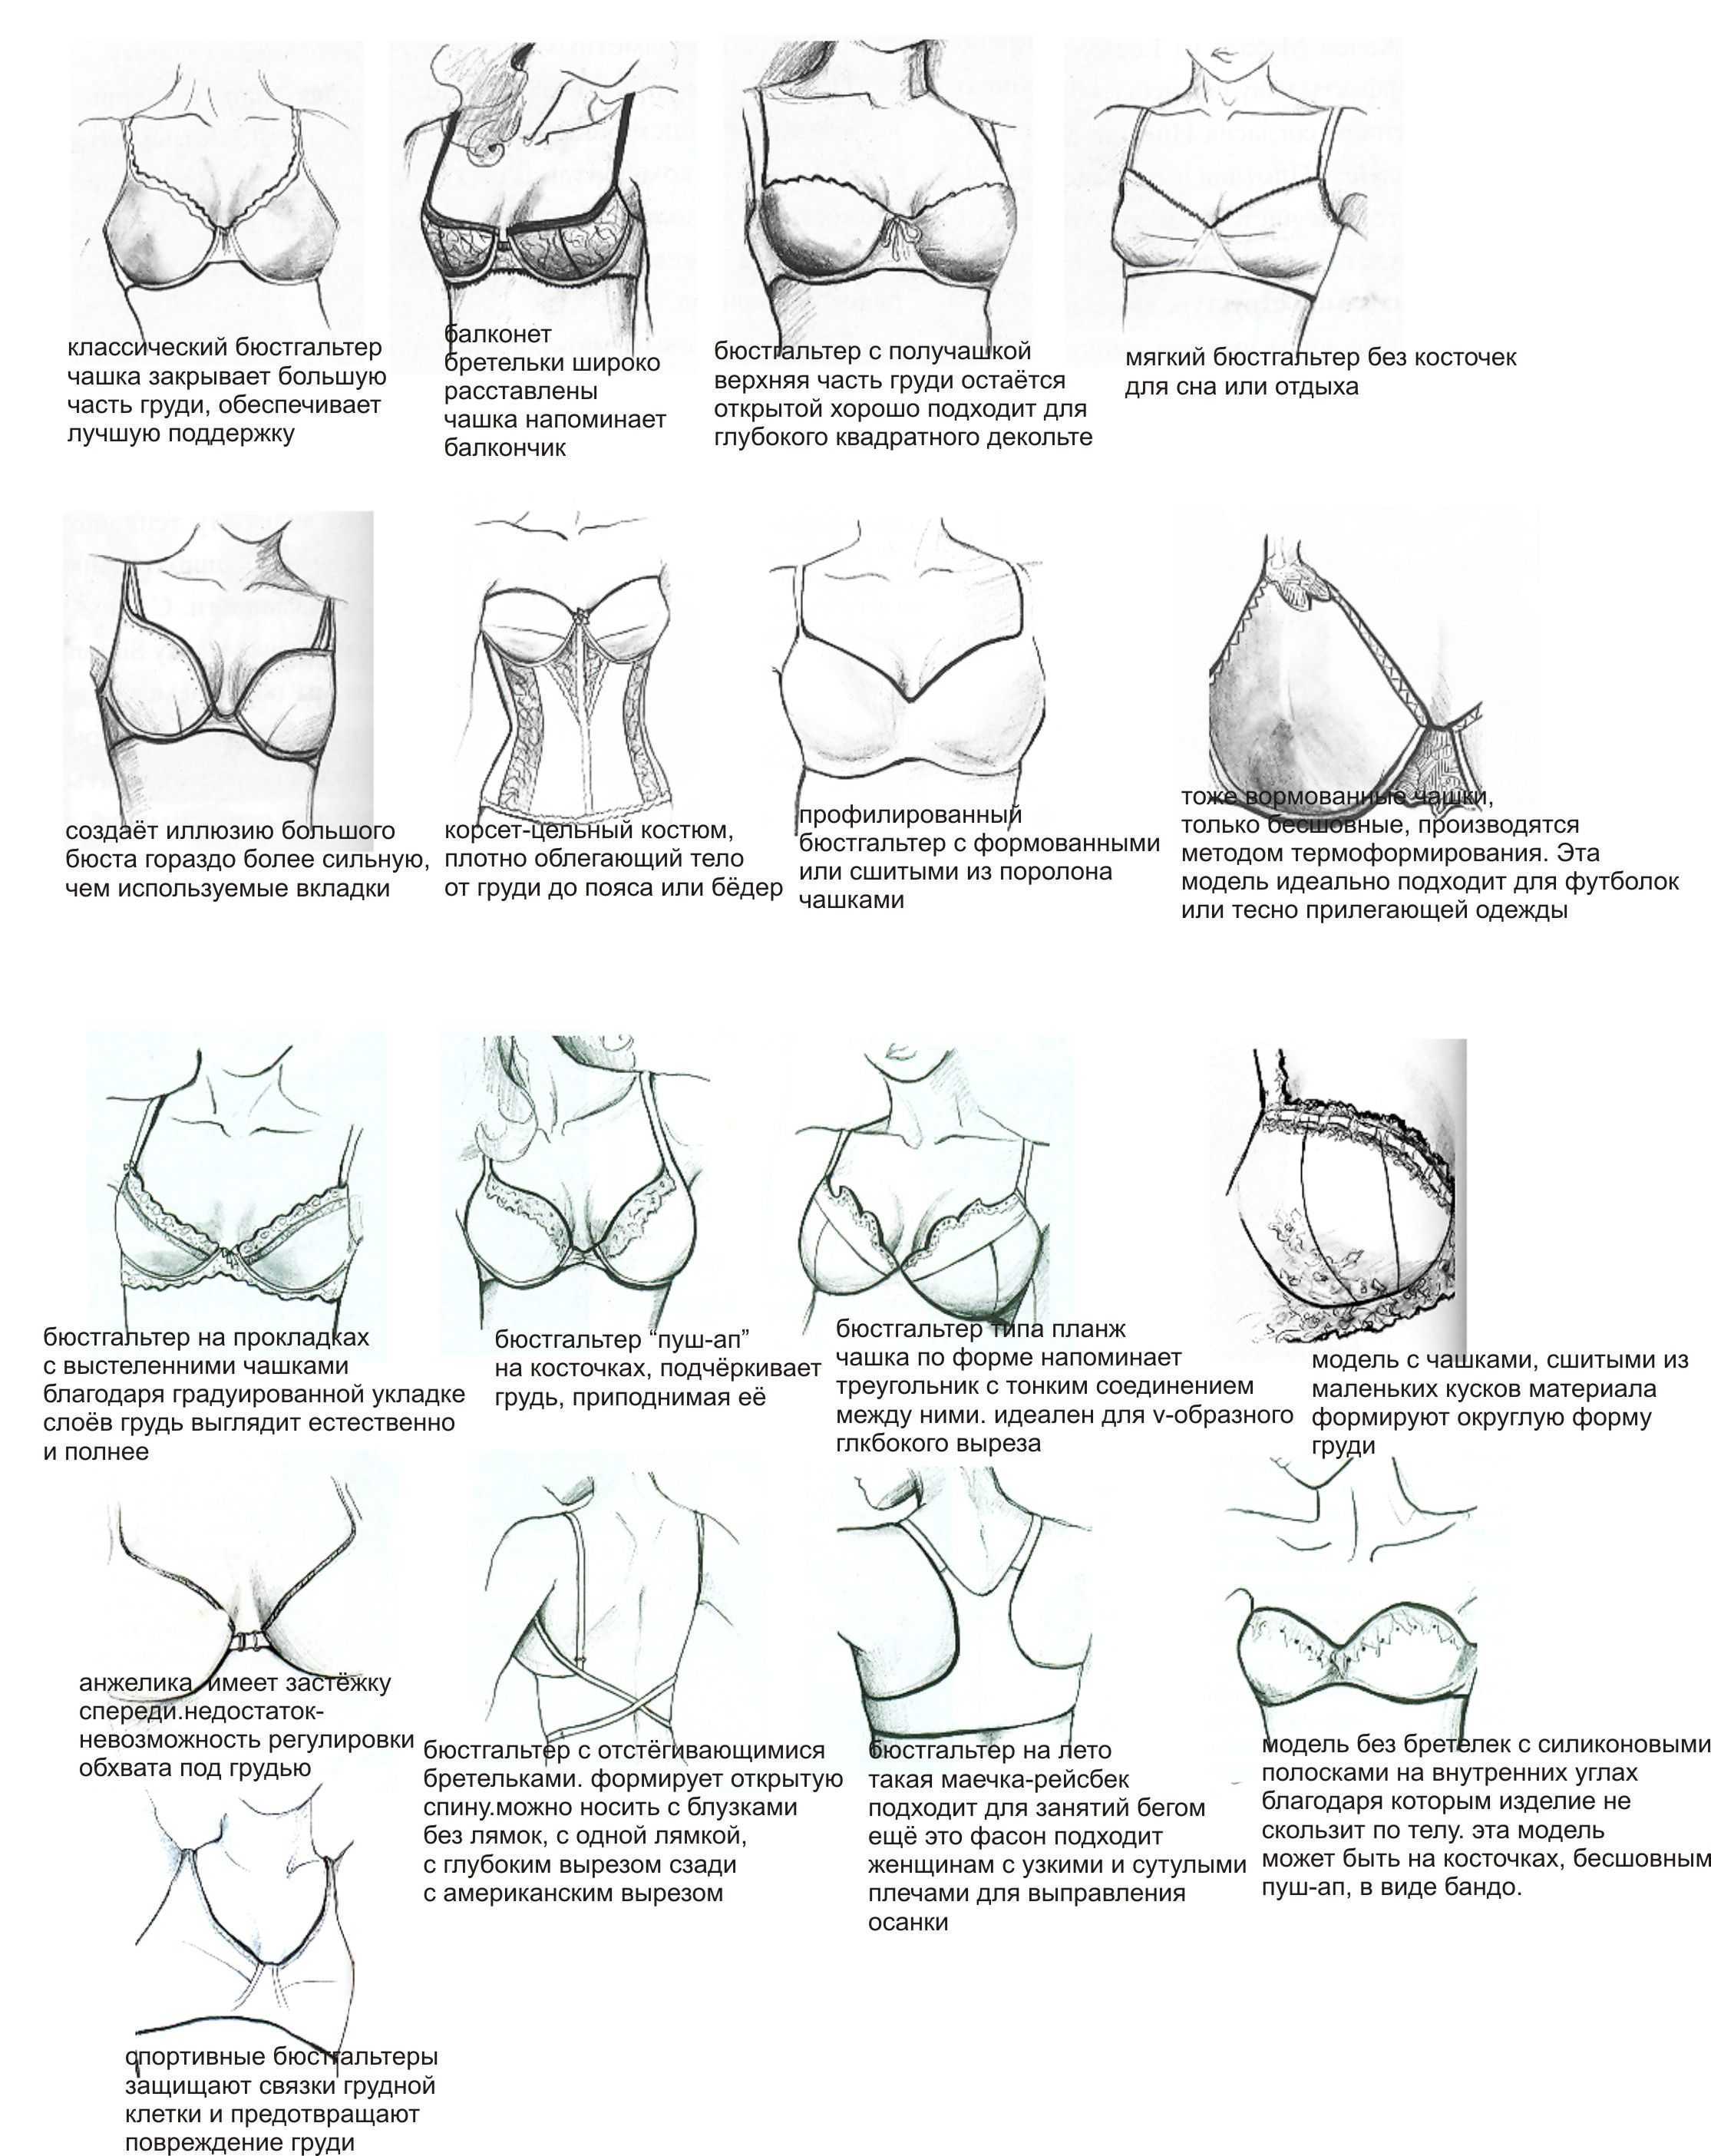 чашечки на женской груди фото 85